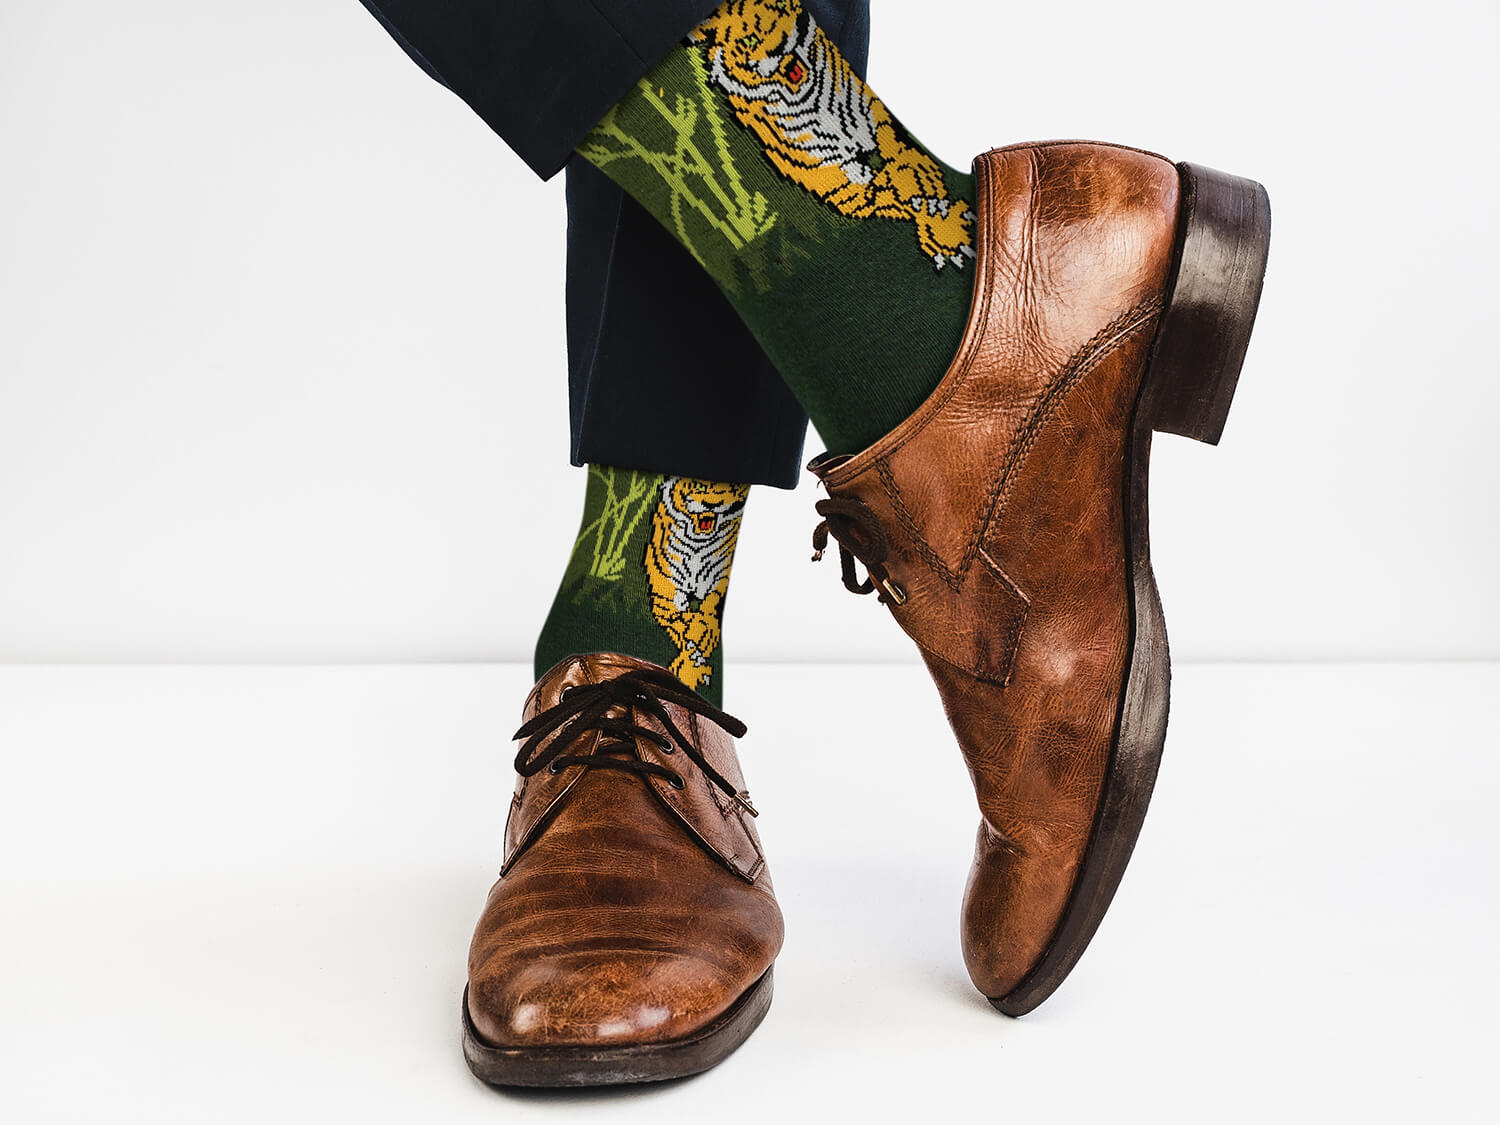 Real Sic - Tiger Green Socks